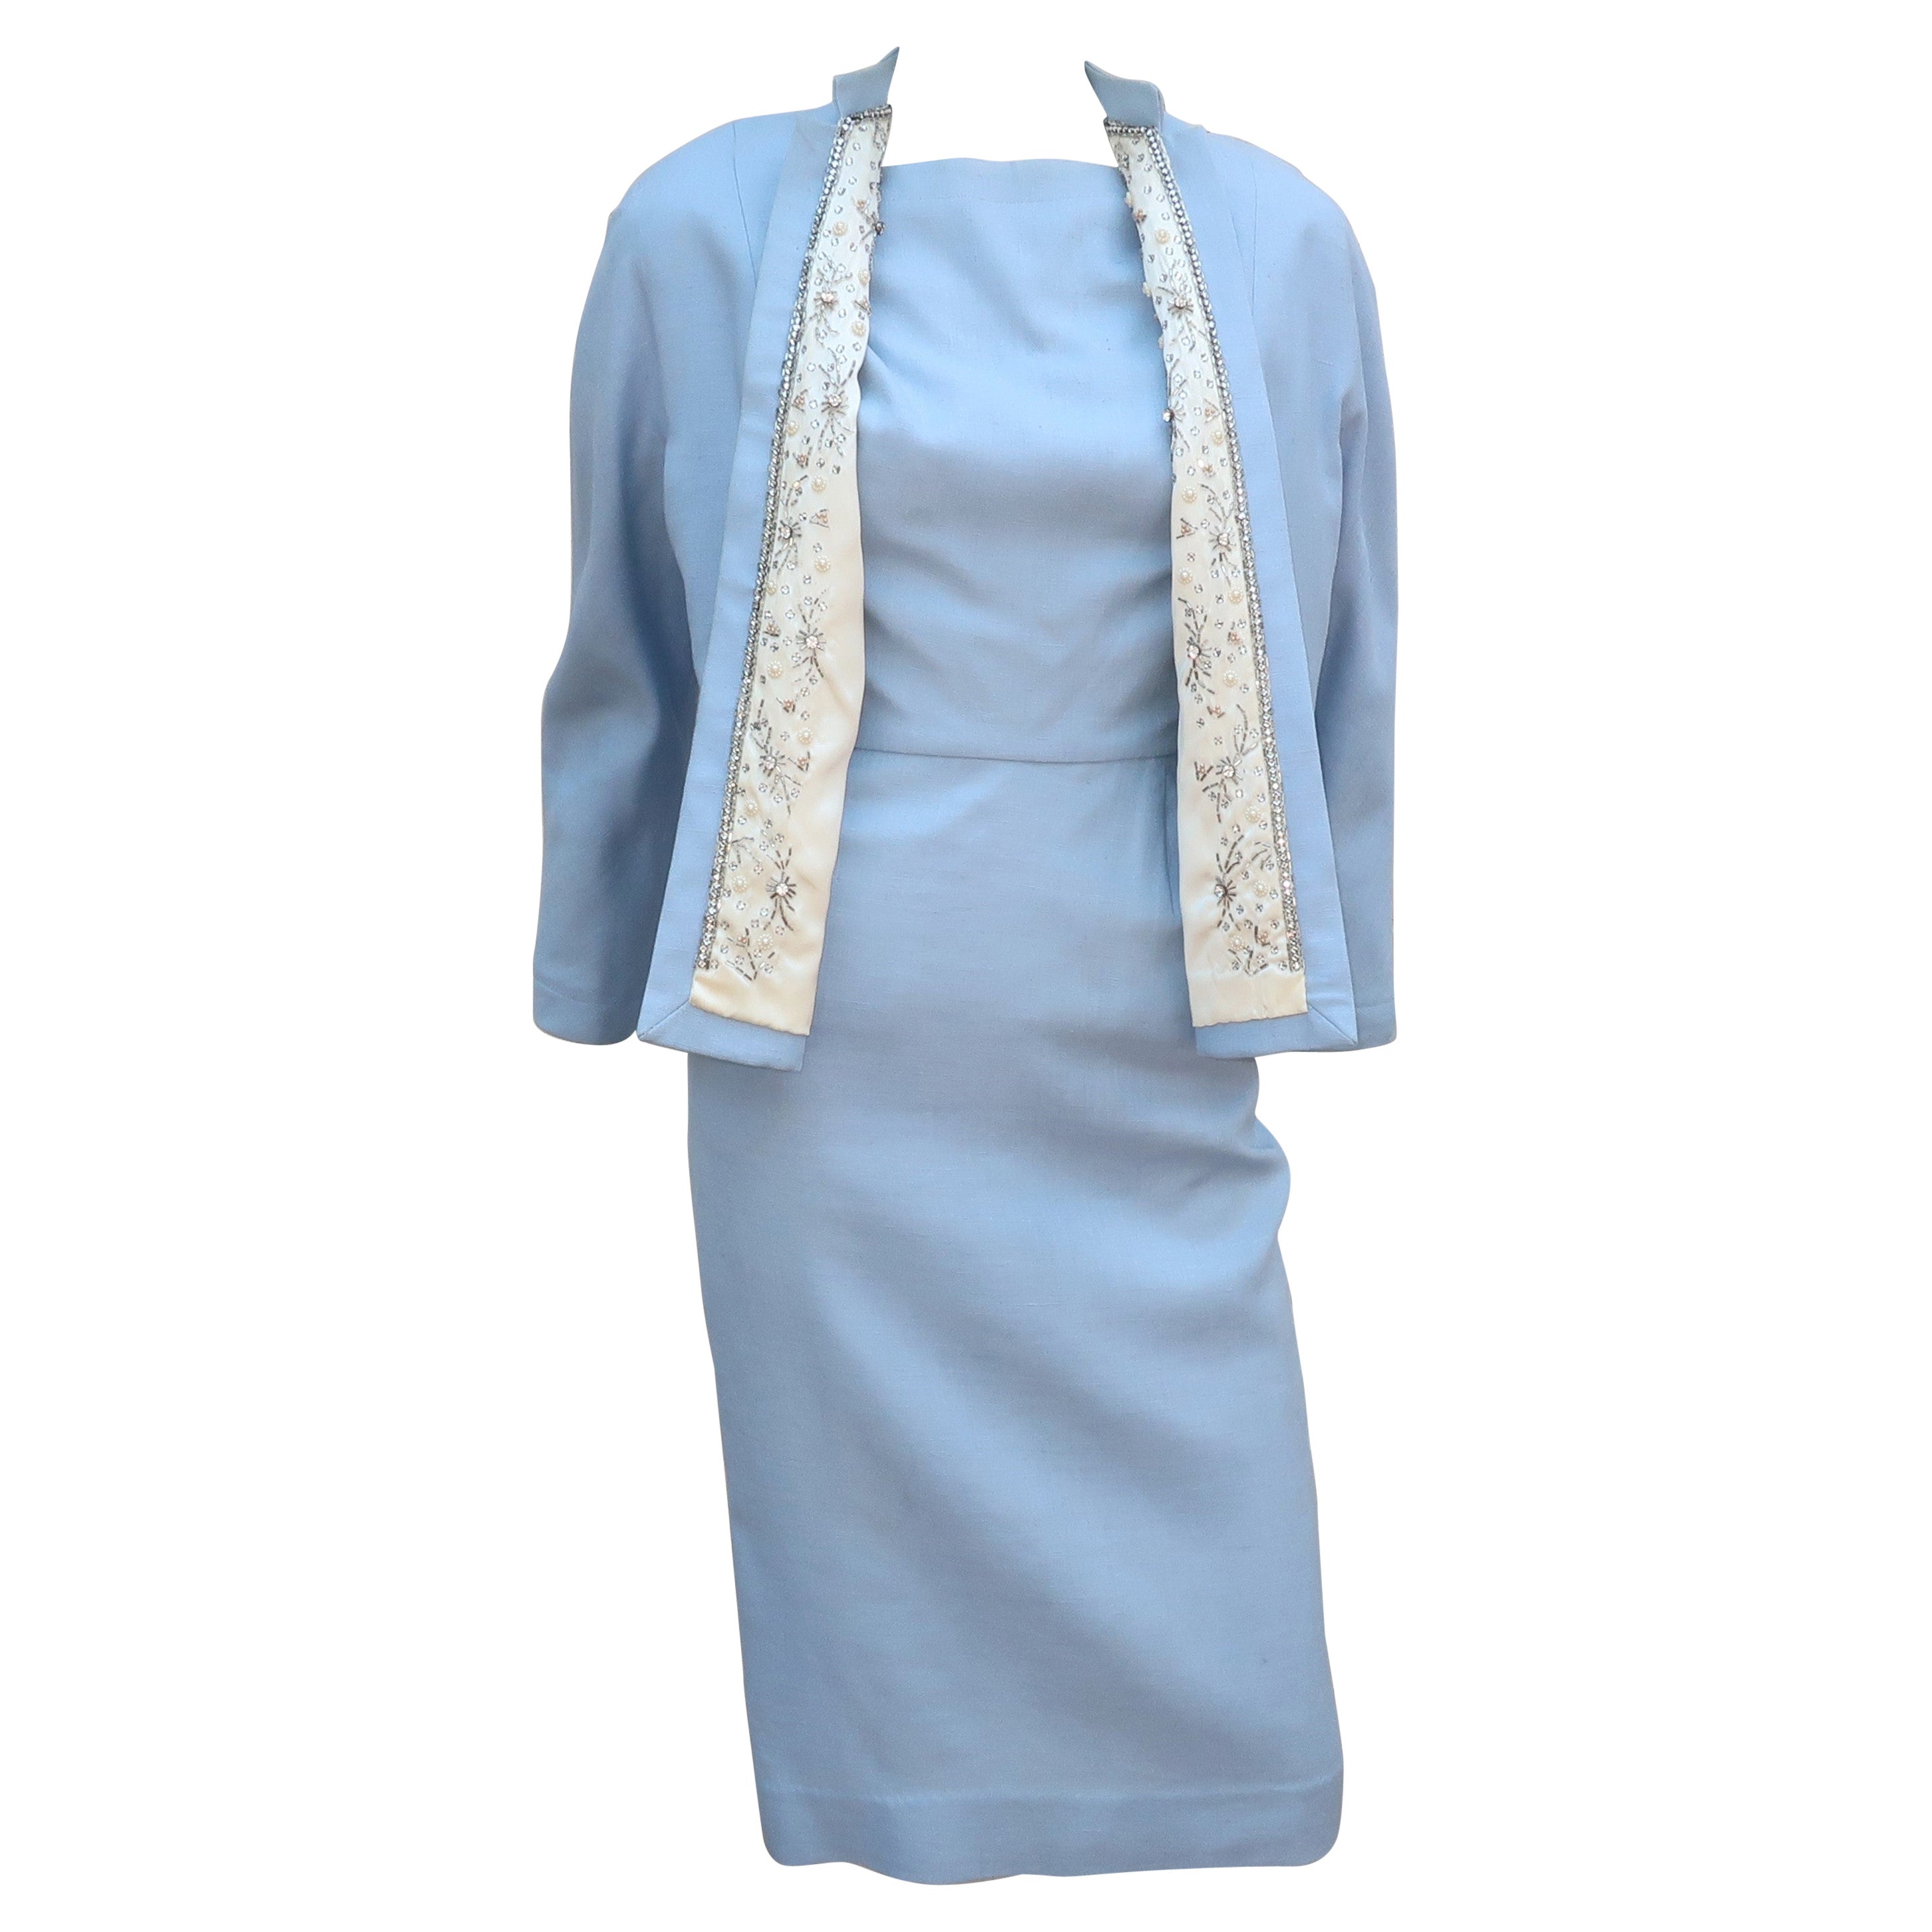 Indian Dress House - Gorgeous Blue Jacket Style Gown 🤩🤩😍😍🤩🤩🤩😍😍😍😍  #blue #gown #trending #bollywood #nikah #sale #floral #indianbridal  #wedding #indiandress #indianwedding #shoppingonline #fashion #johannesburg  #dresses #womenswear #women ...